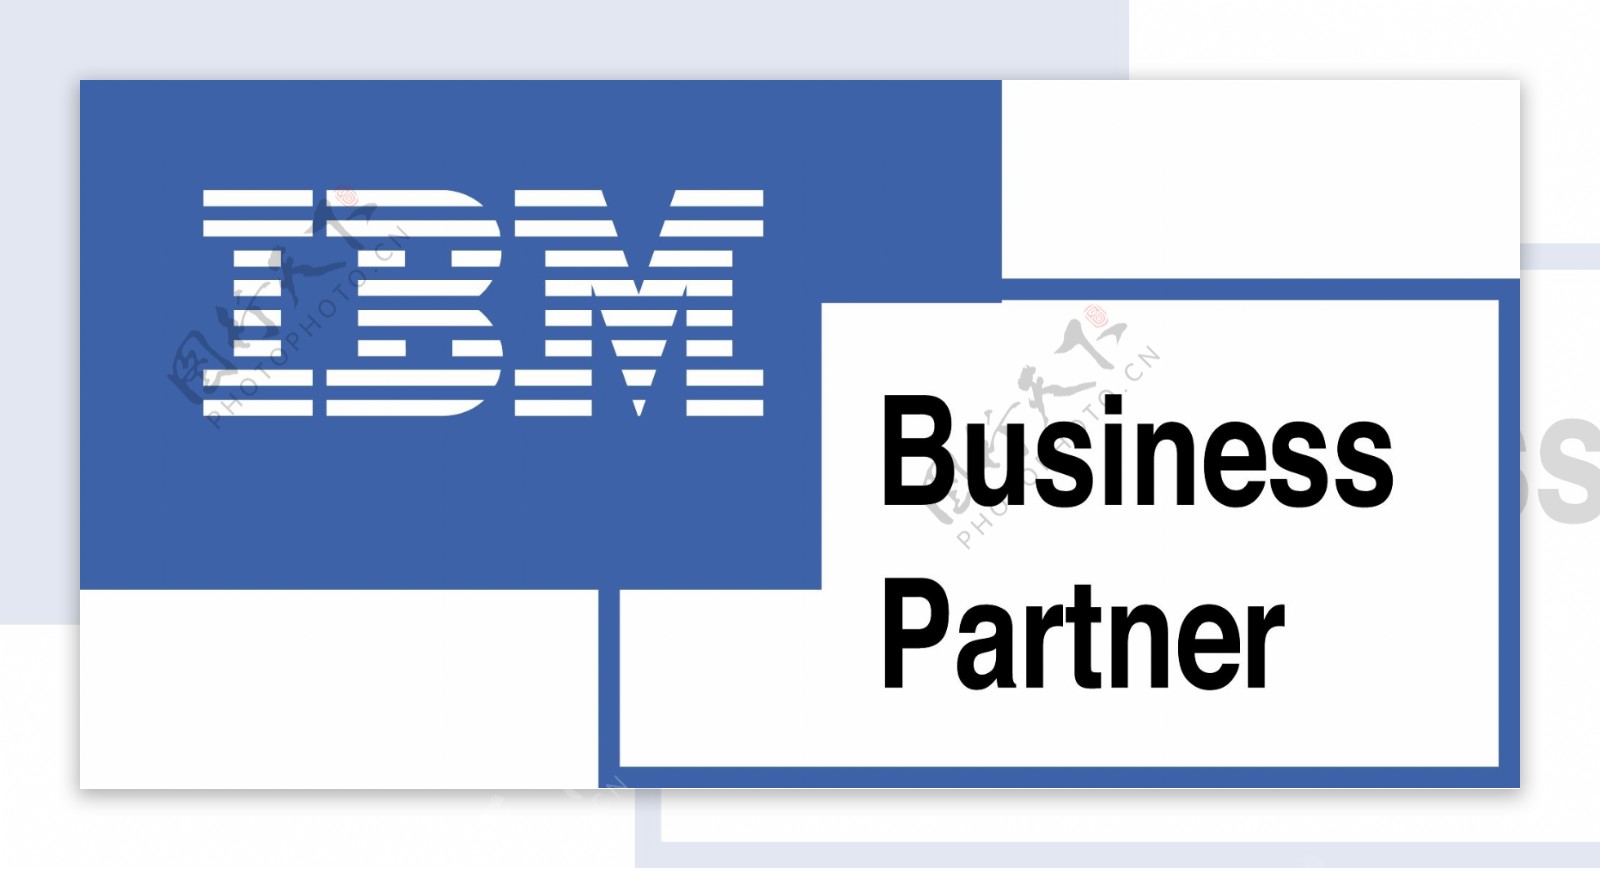 IBM业务合作伙伴